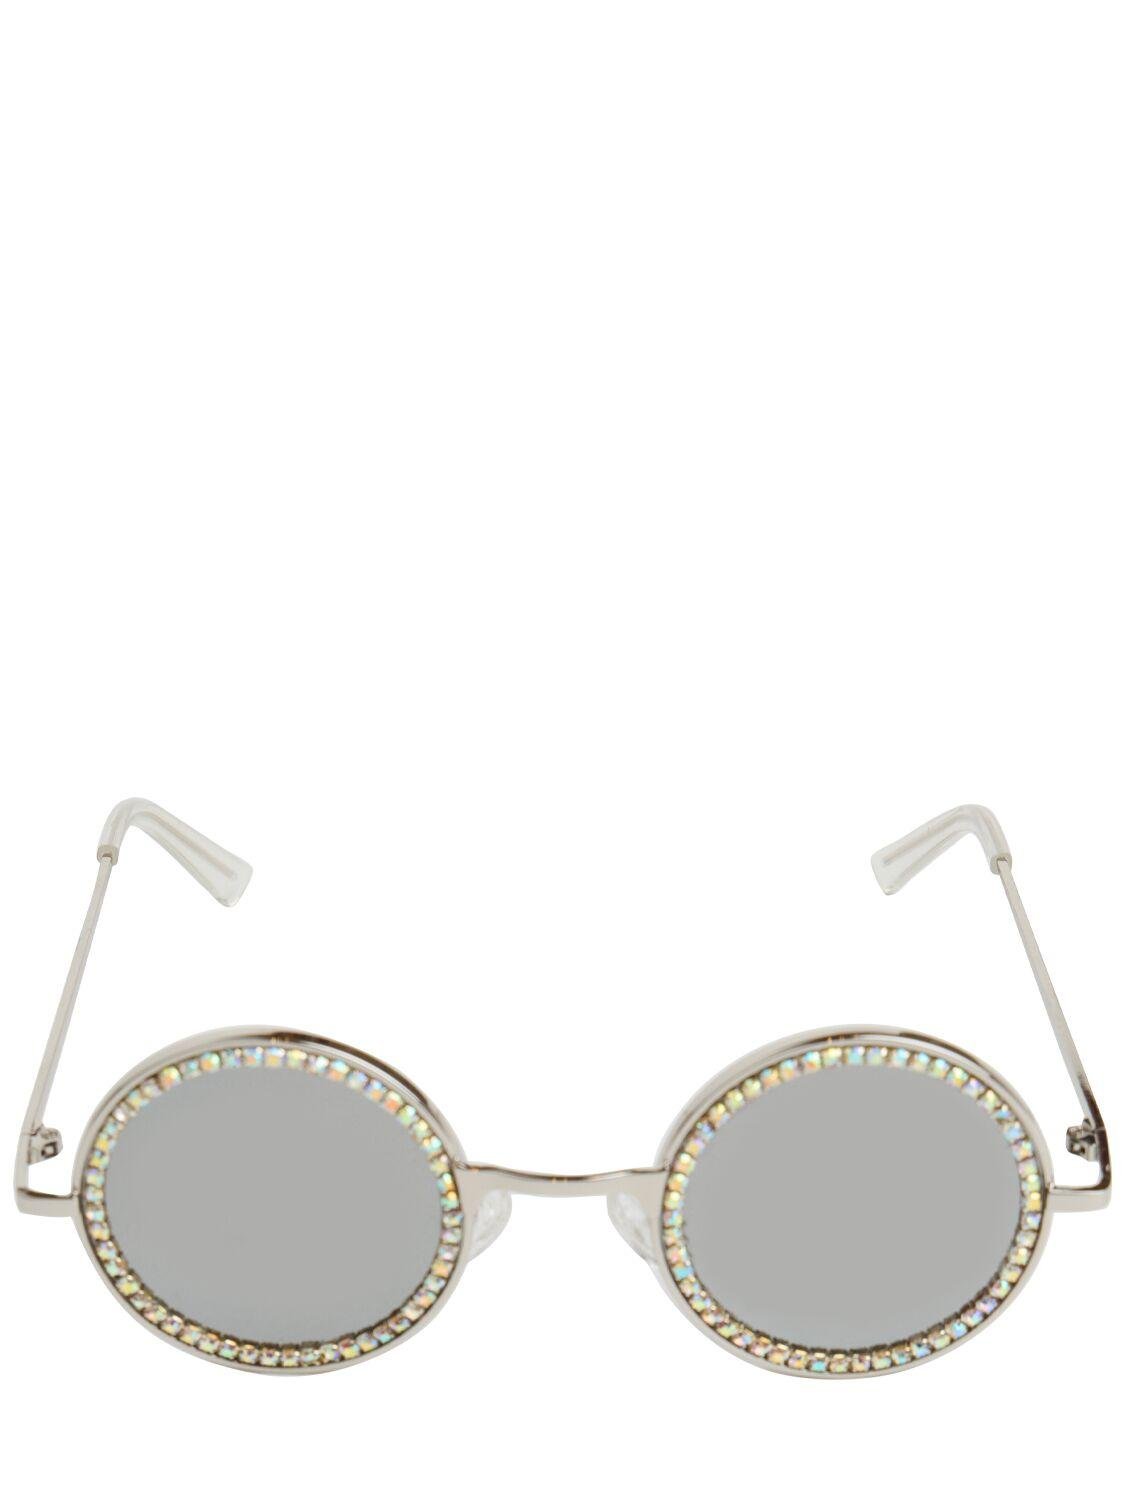 Embellished Round Sunglasses by MONNALISA